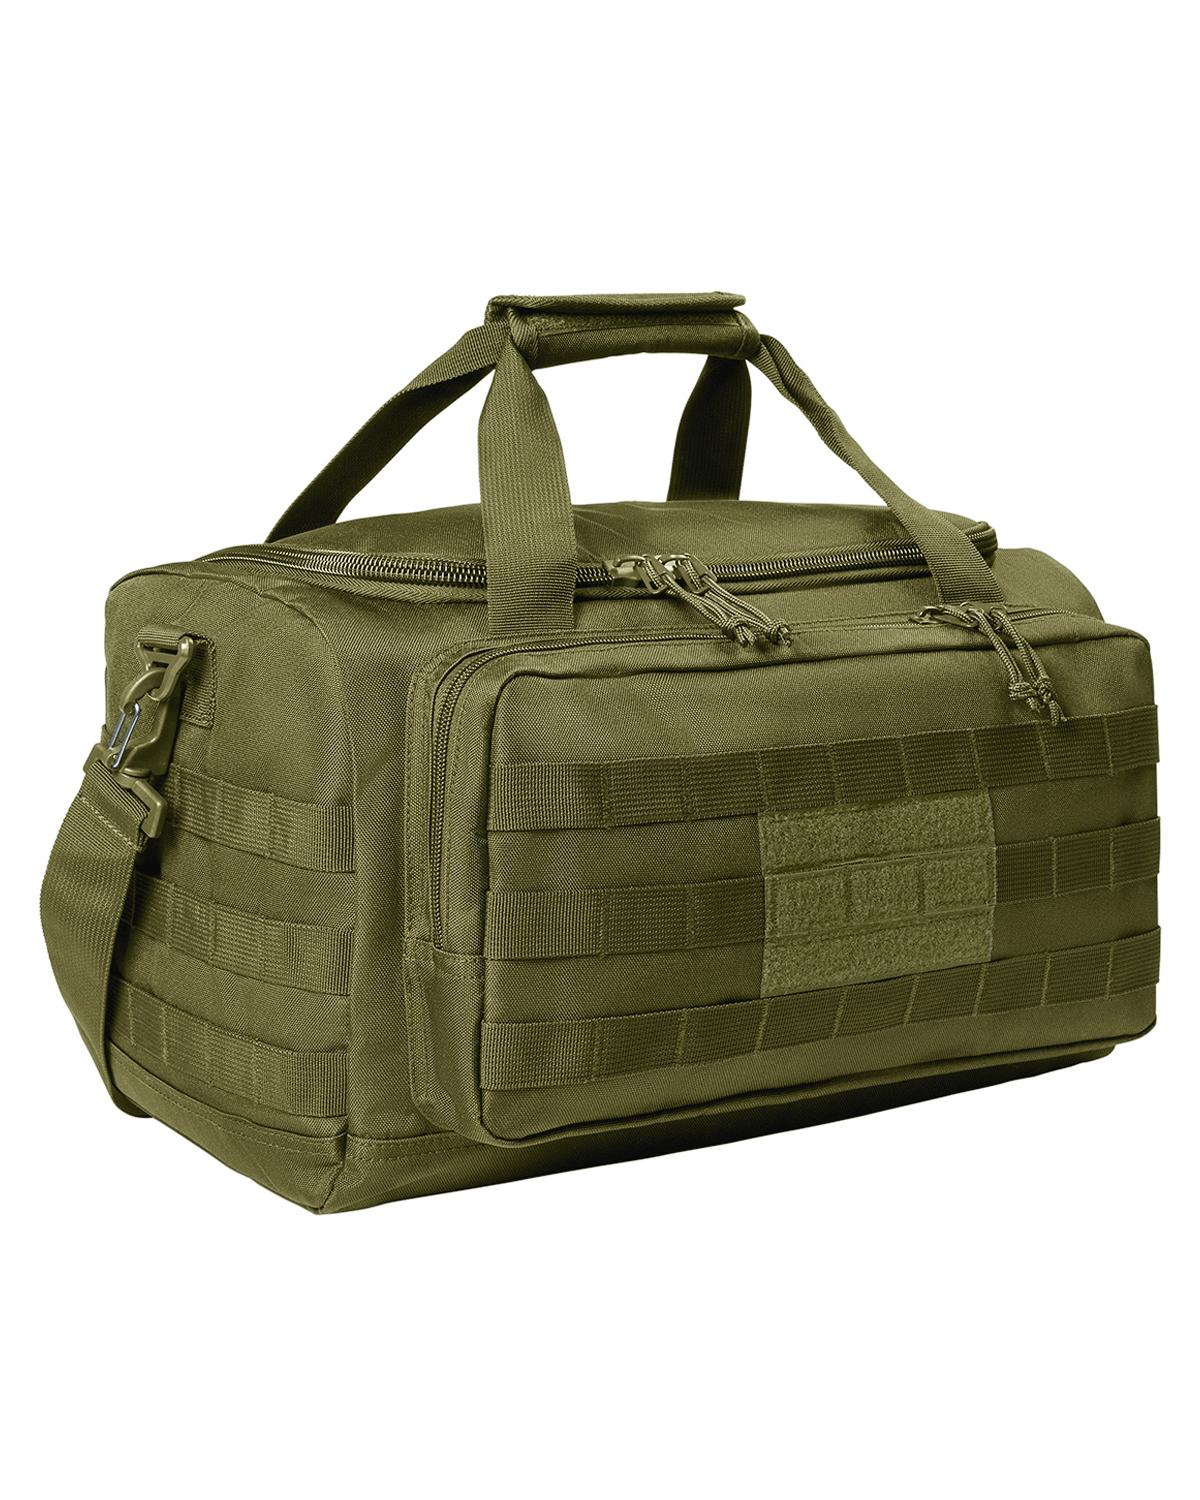 CornerStone CSB816 Tactical Gear Bag